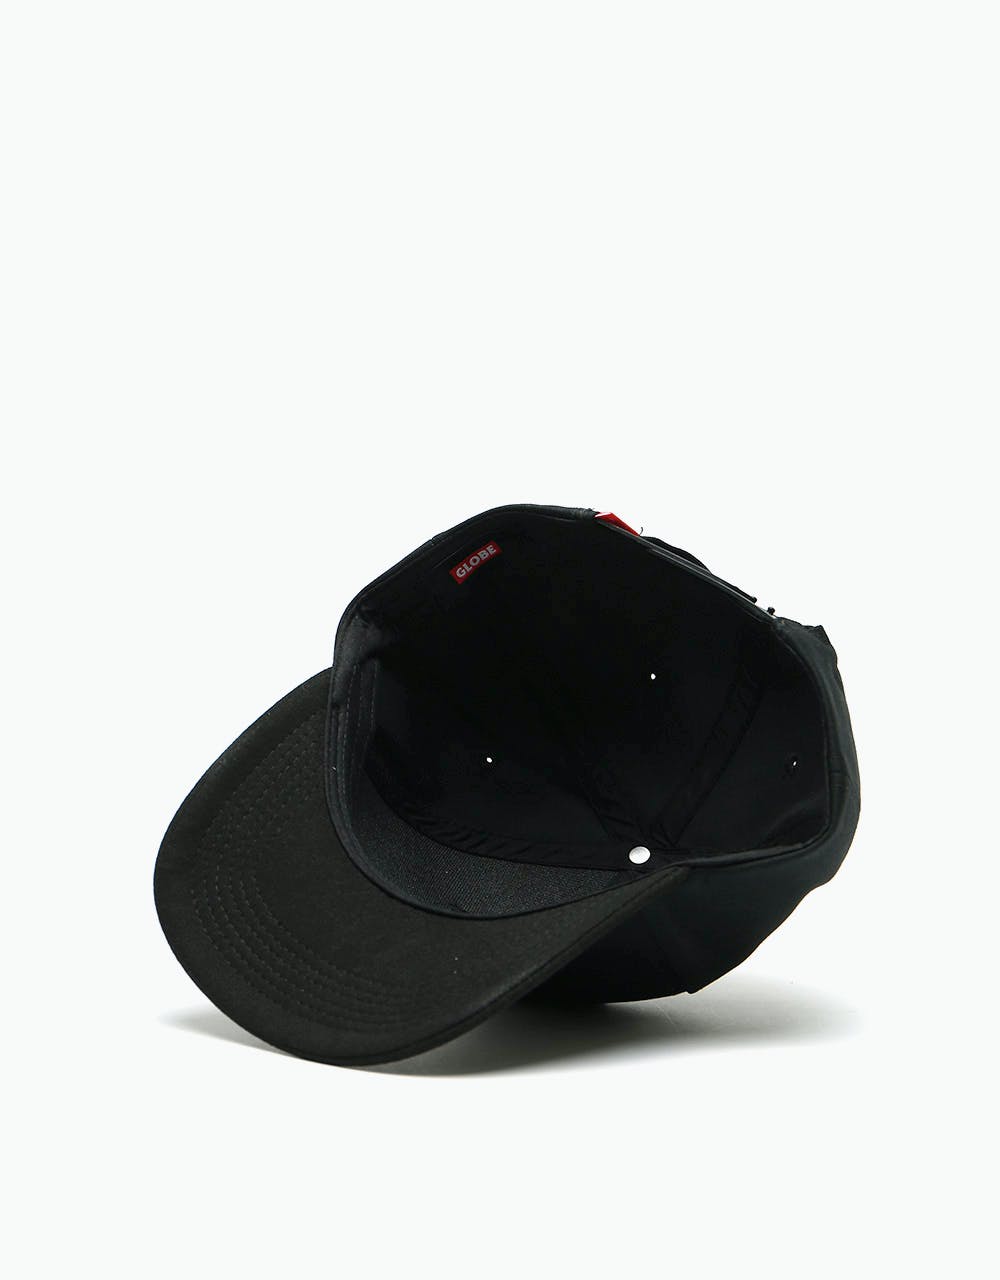 Globe Gladstone II Snapback Cap - Black/Black